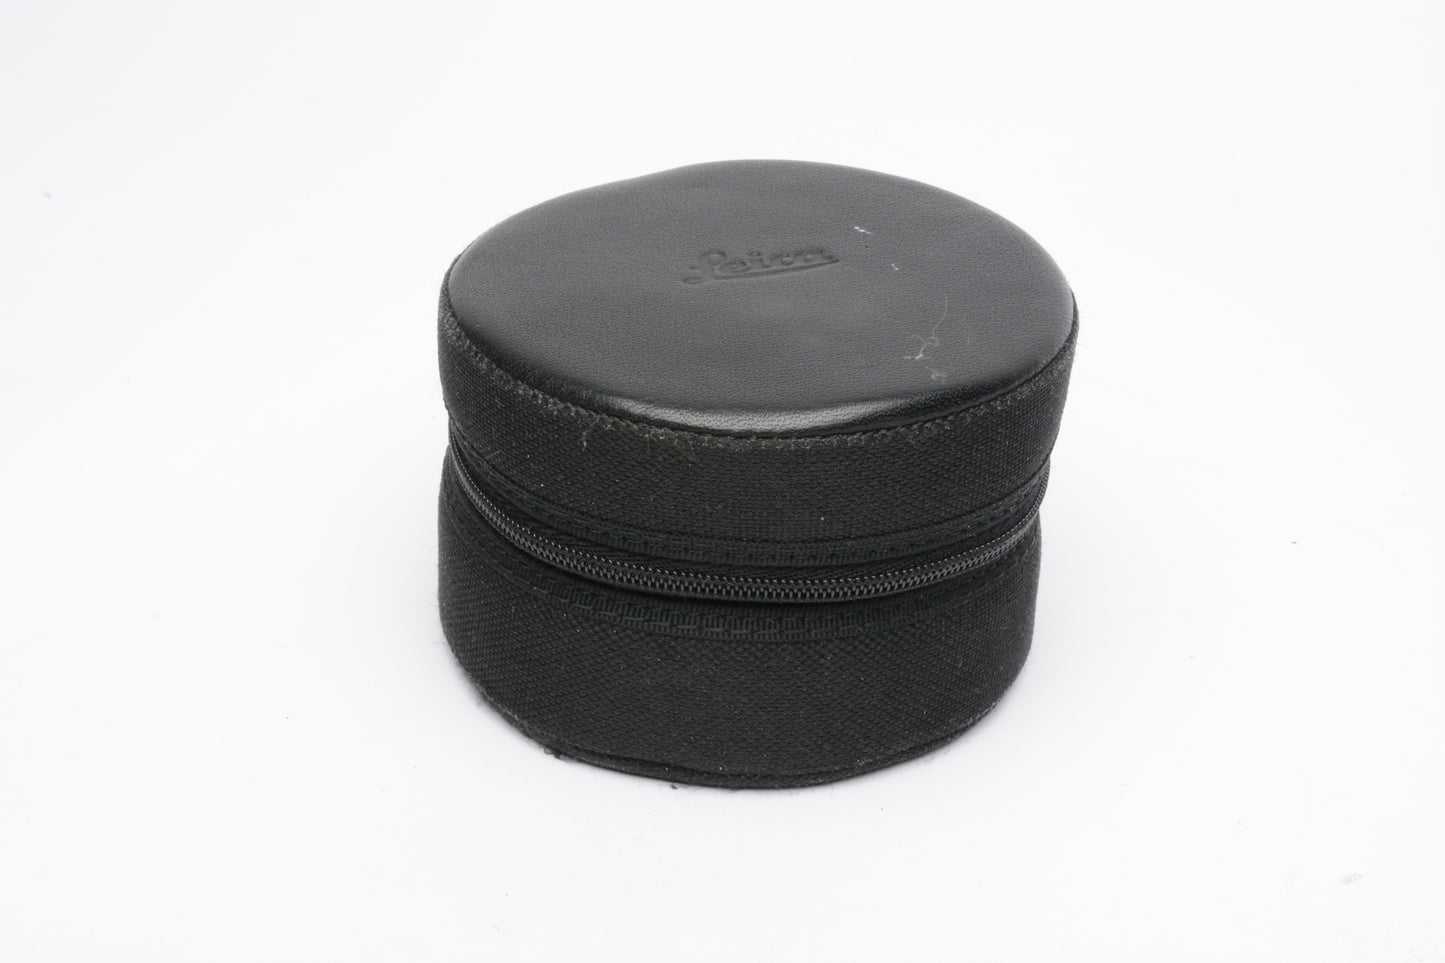 Leica 13356 Universal Top (Linear) Polarizer Filter for M Lenses, rings + case